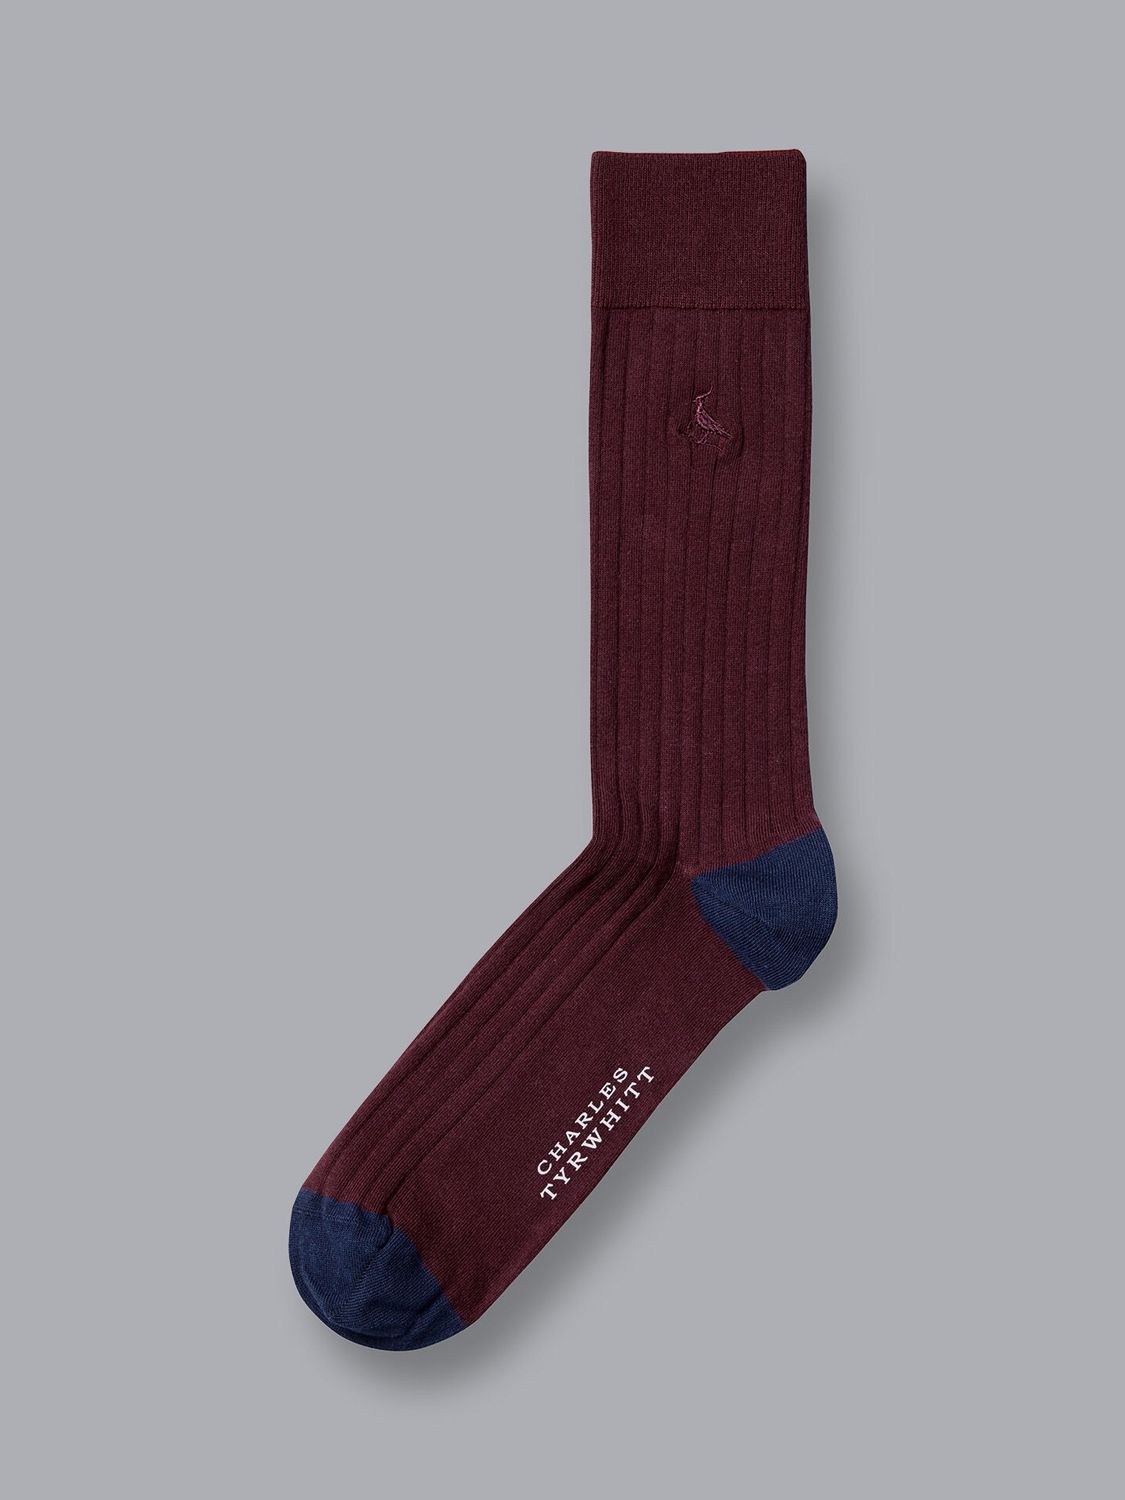 Charles Tyrwhitt Indigo Blue Cotton Rib Socks, Wine Red, M